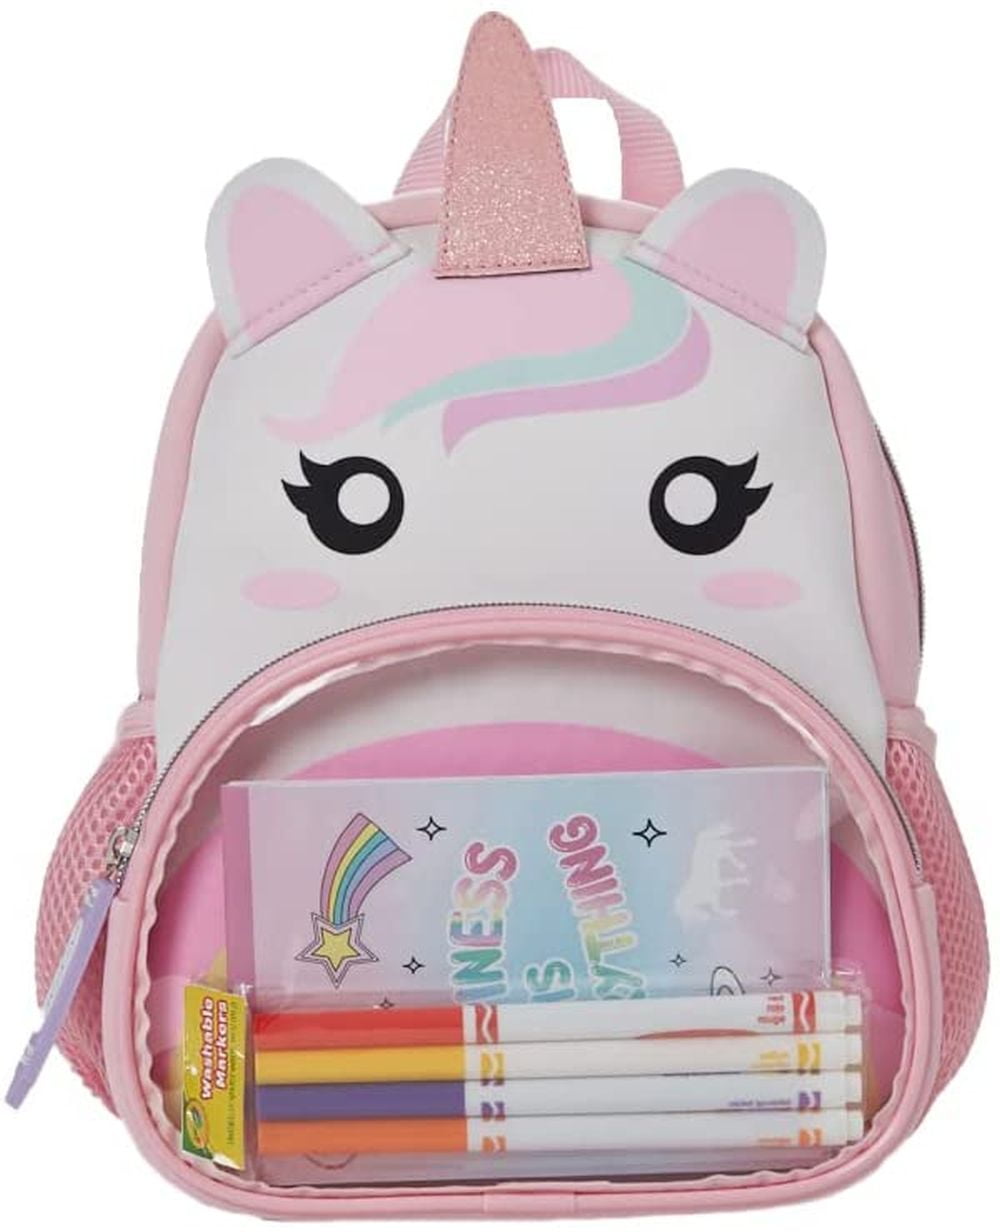 Buy FunBlast Unicorn Soft Bag for Kids - School & Picnic Bag/Lightweight  Travel School Mini Backpack for Girls & Kids (Random Color) at Amazon.in